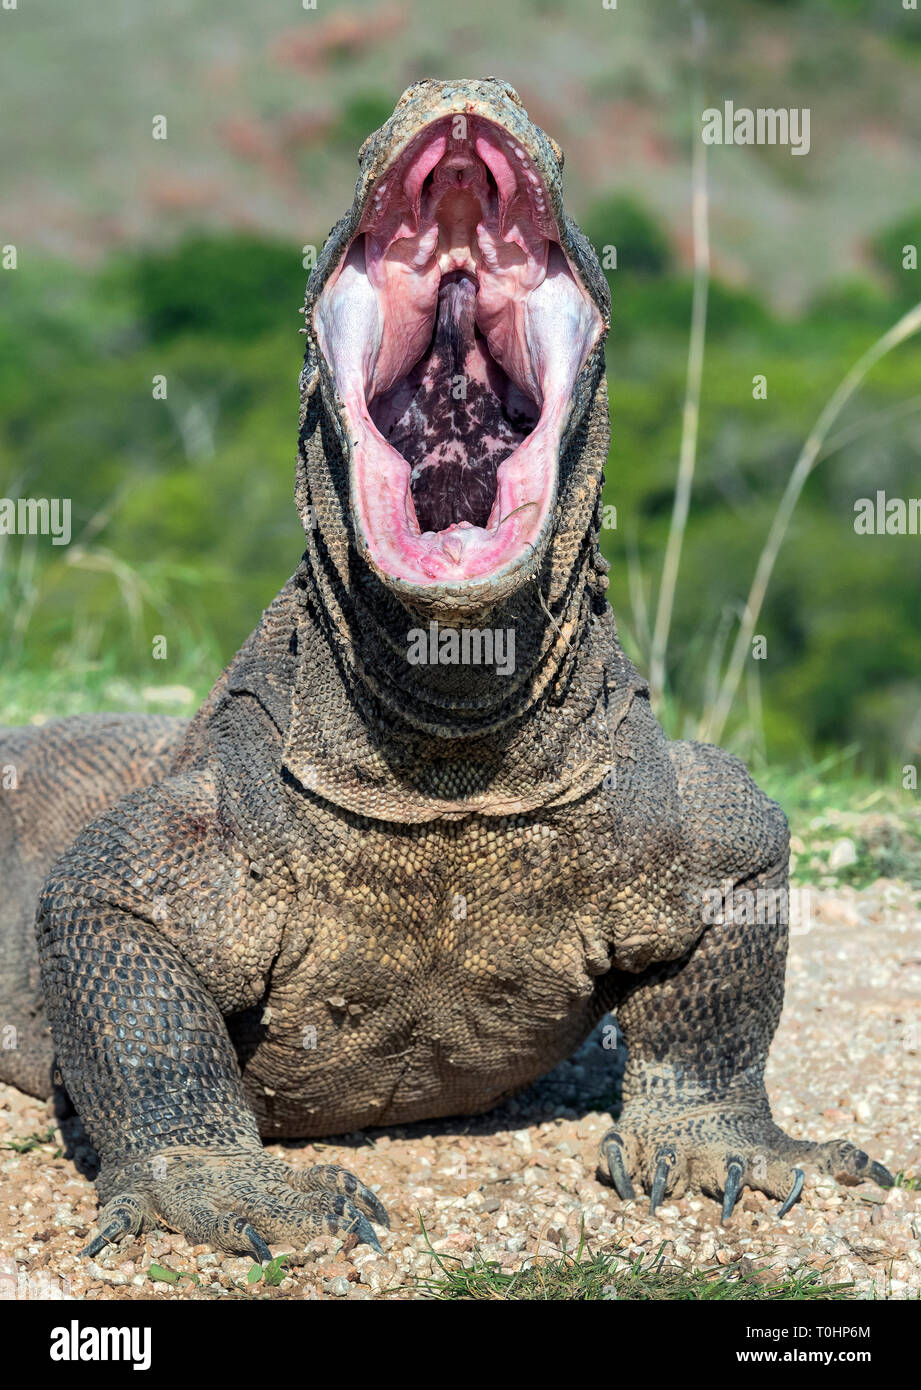 The open mouth of the Komodo dragon. Close up portrait, front view. Komodo dragon.  Scientific name: Varanus Komodoensis. Natural habitat. Indonesia.  Stock Photo